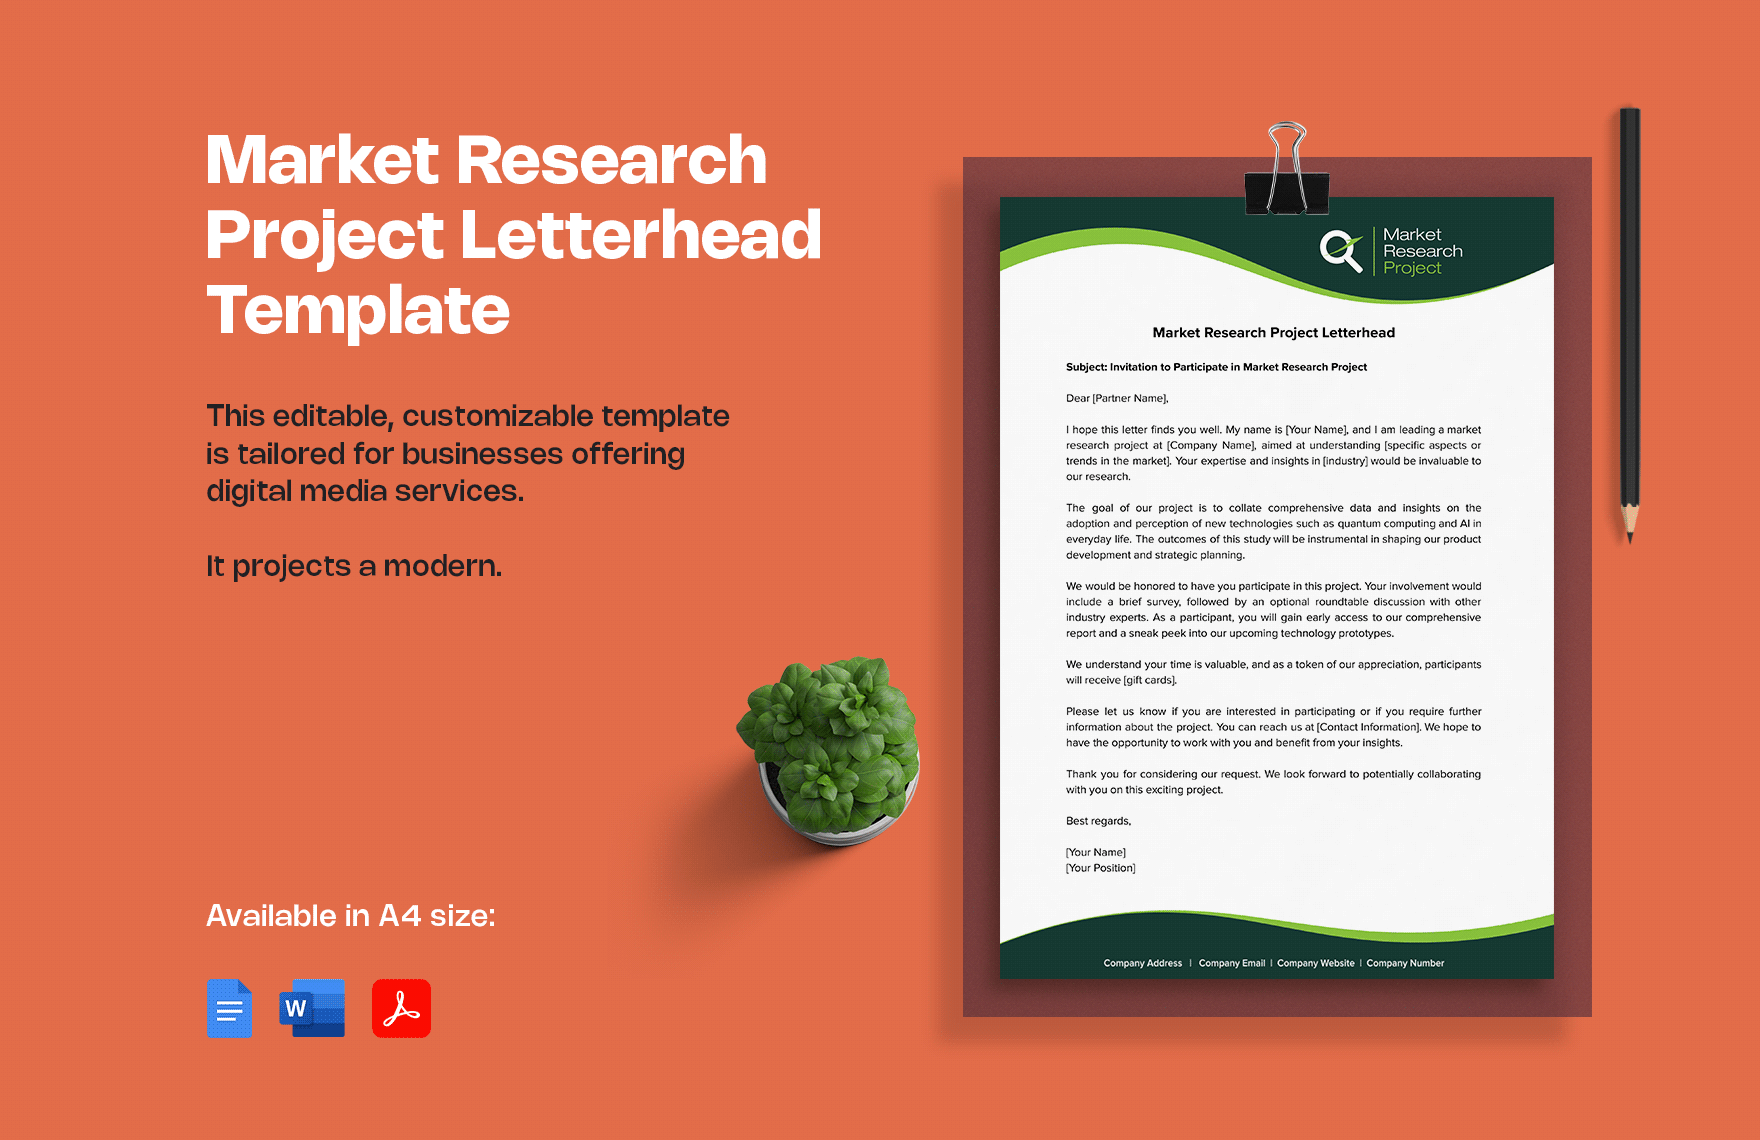 Market Research Project Letterhead Template